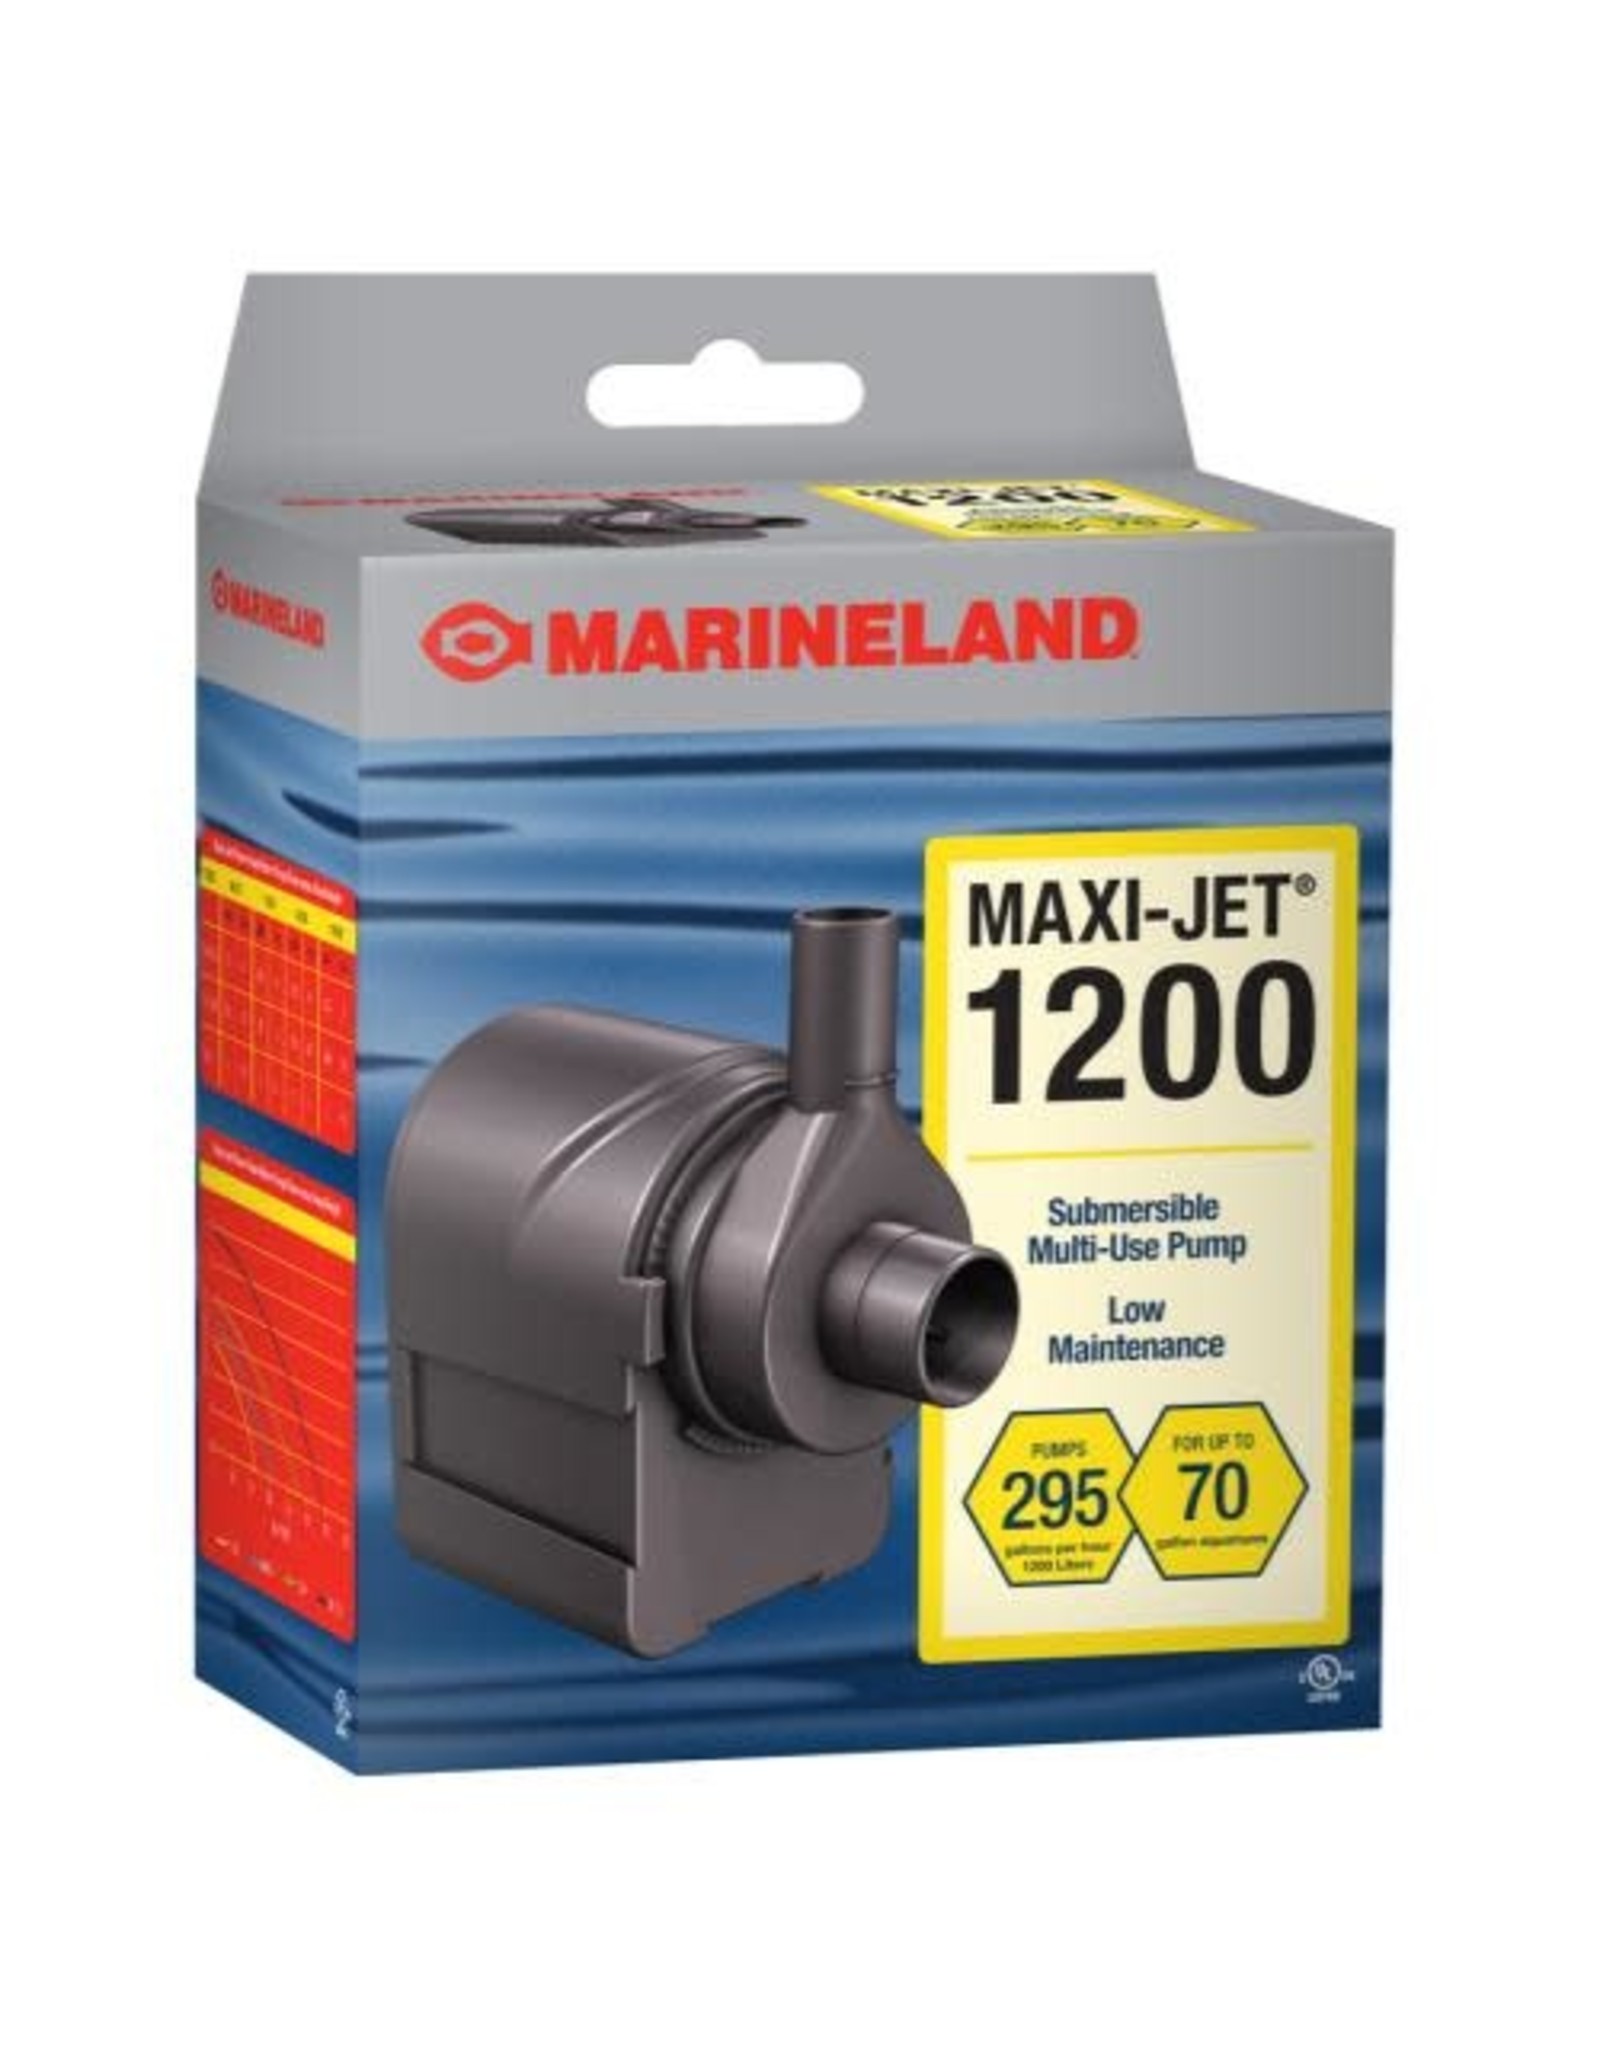 Marineland Maxi-Jet 1200 Water Pump 295 GPH